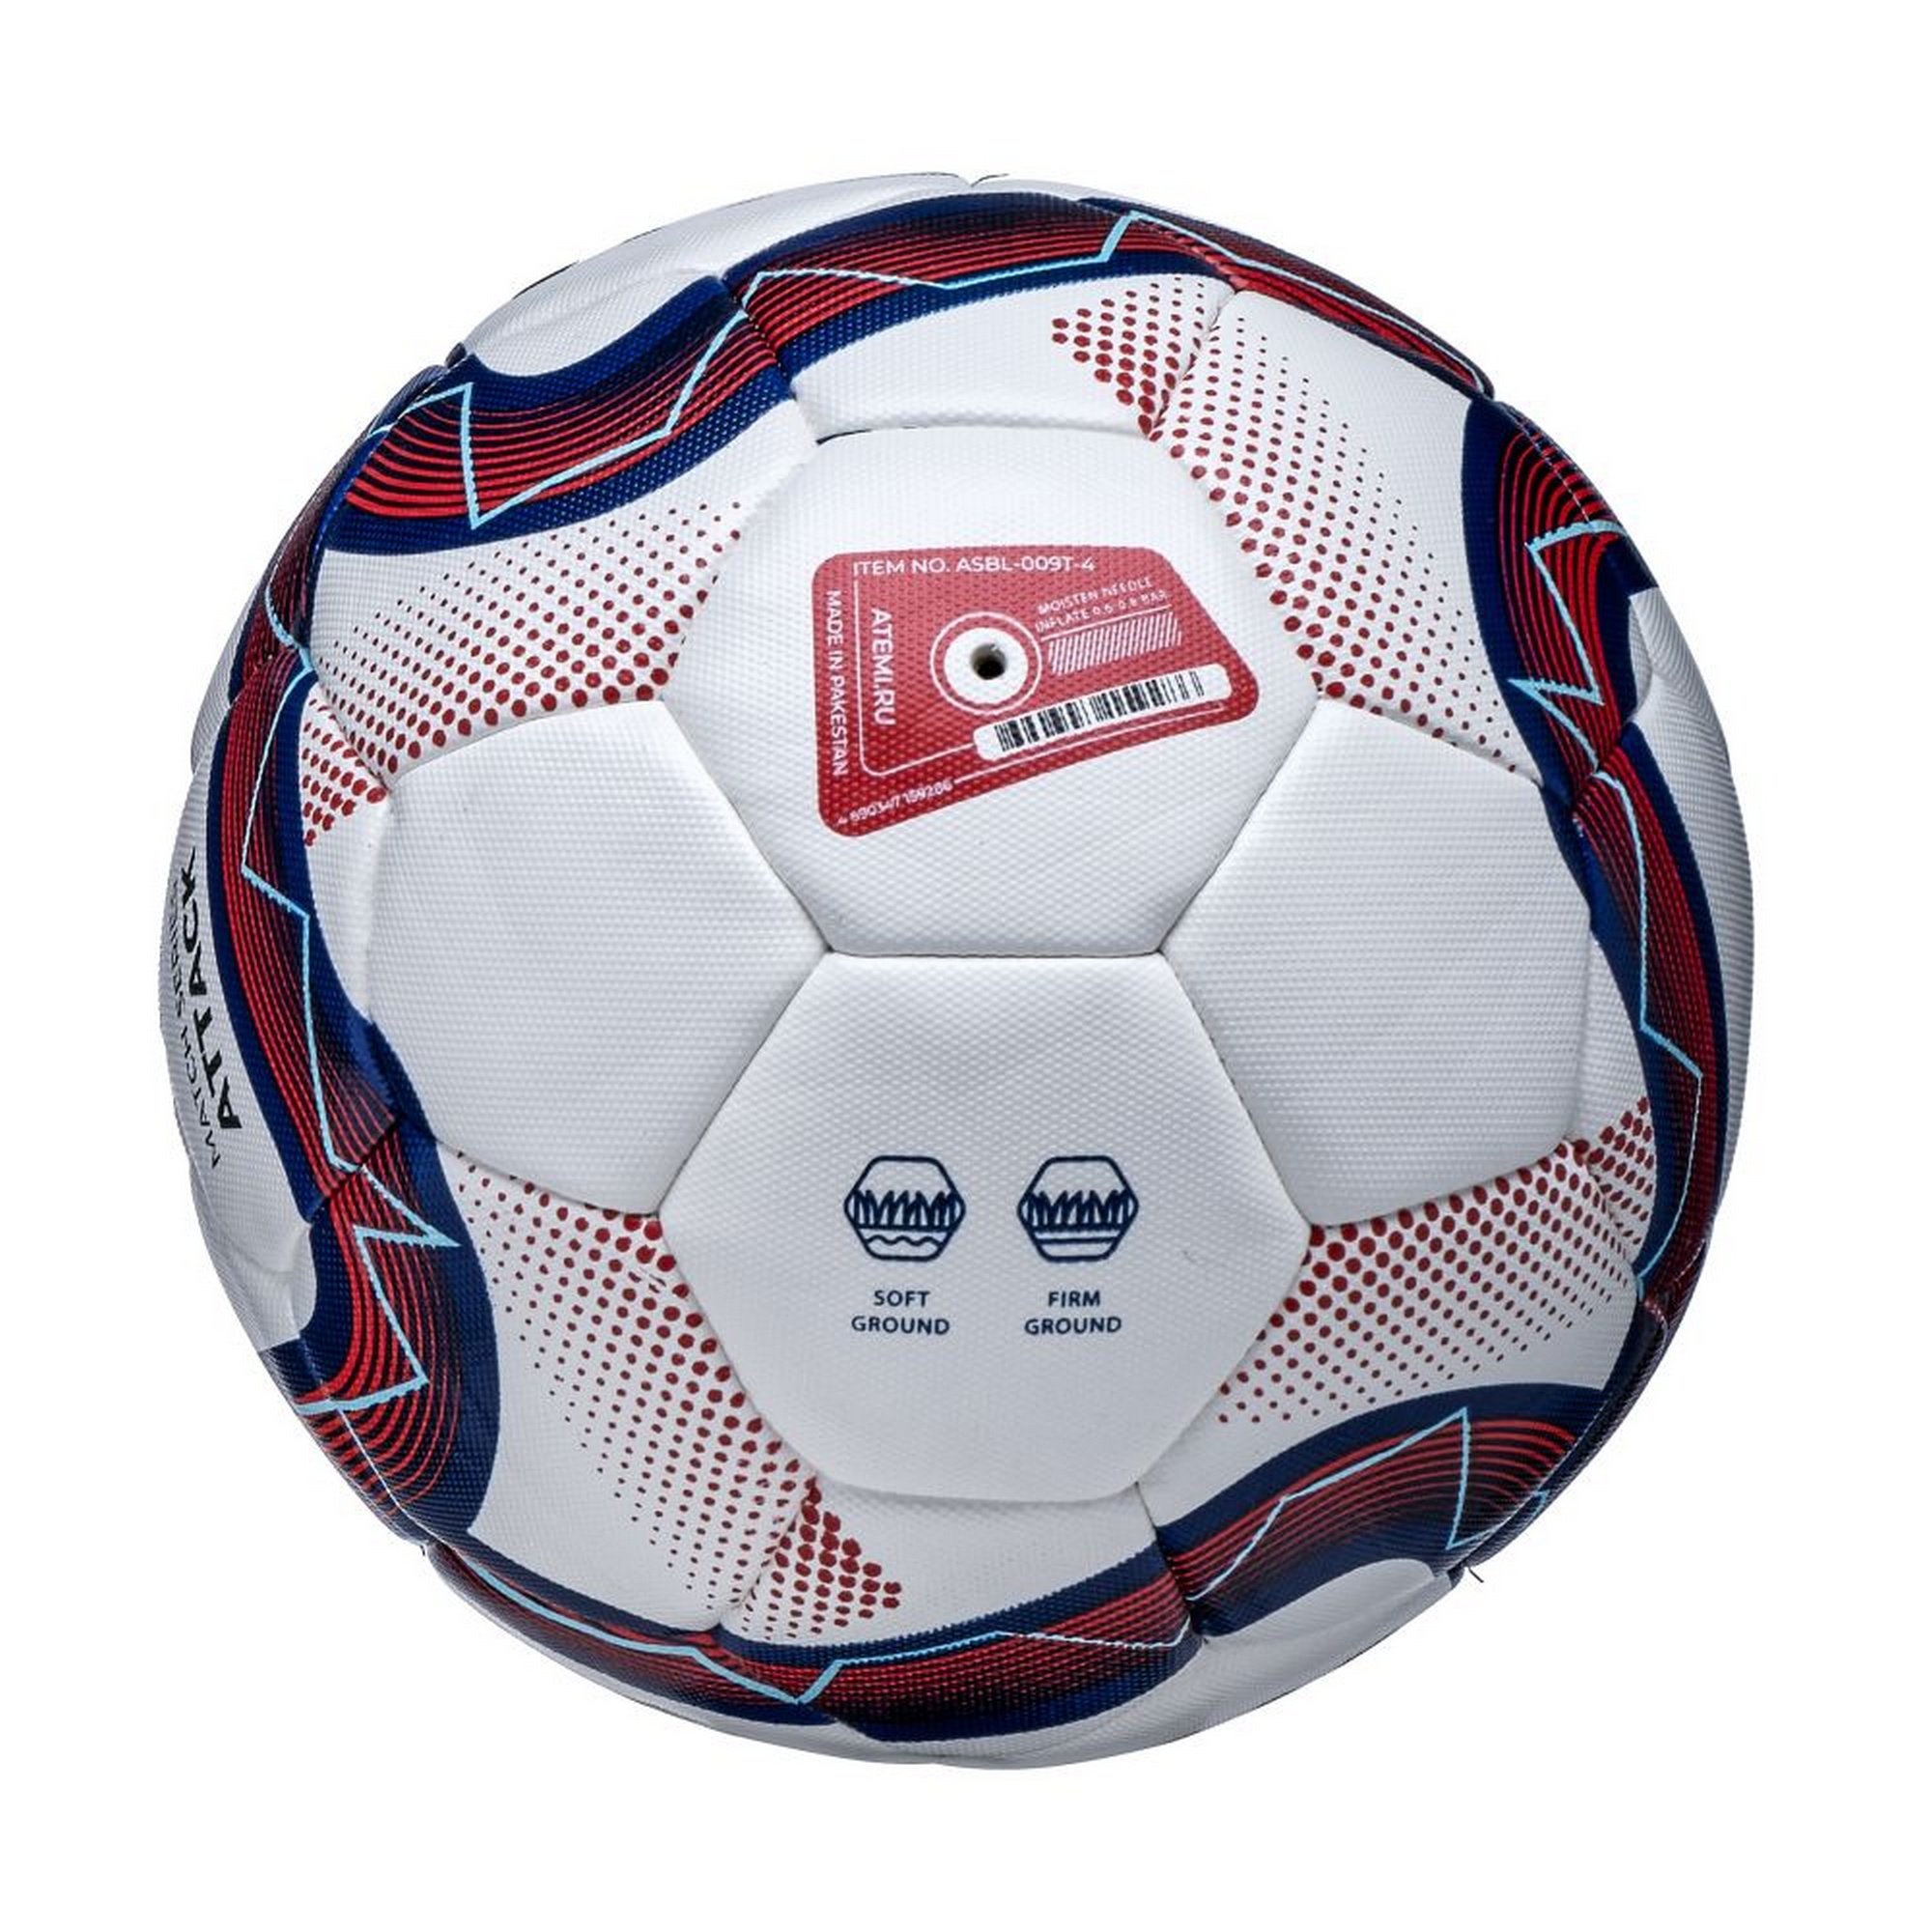 Мяч футбольный Atemi Attack Match Hybrid stitching ASBL-009T-4 р.4 2000_1998